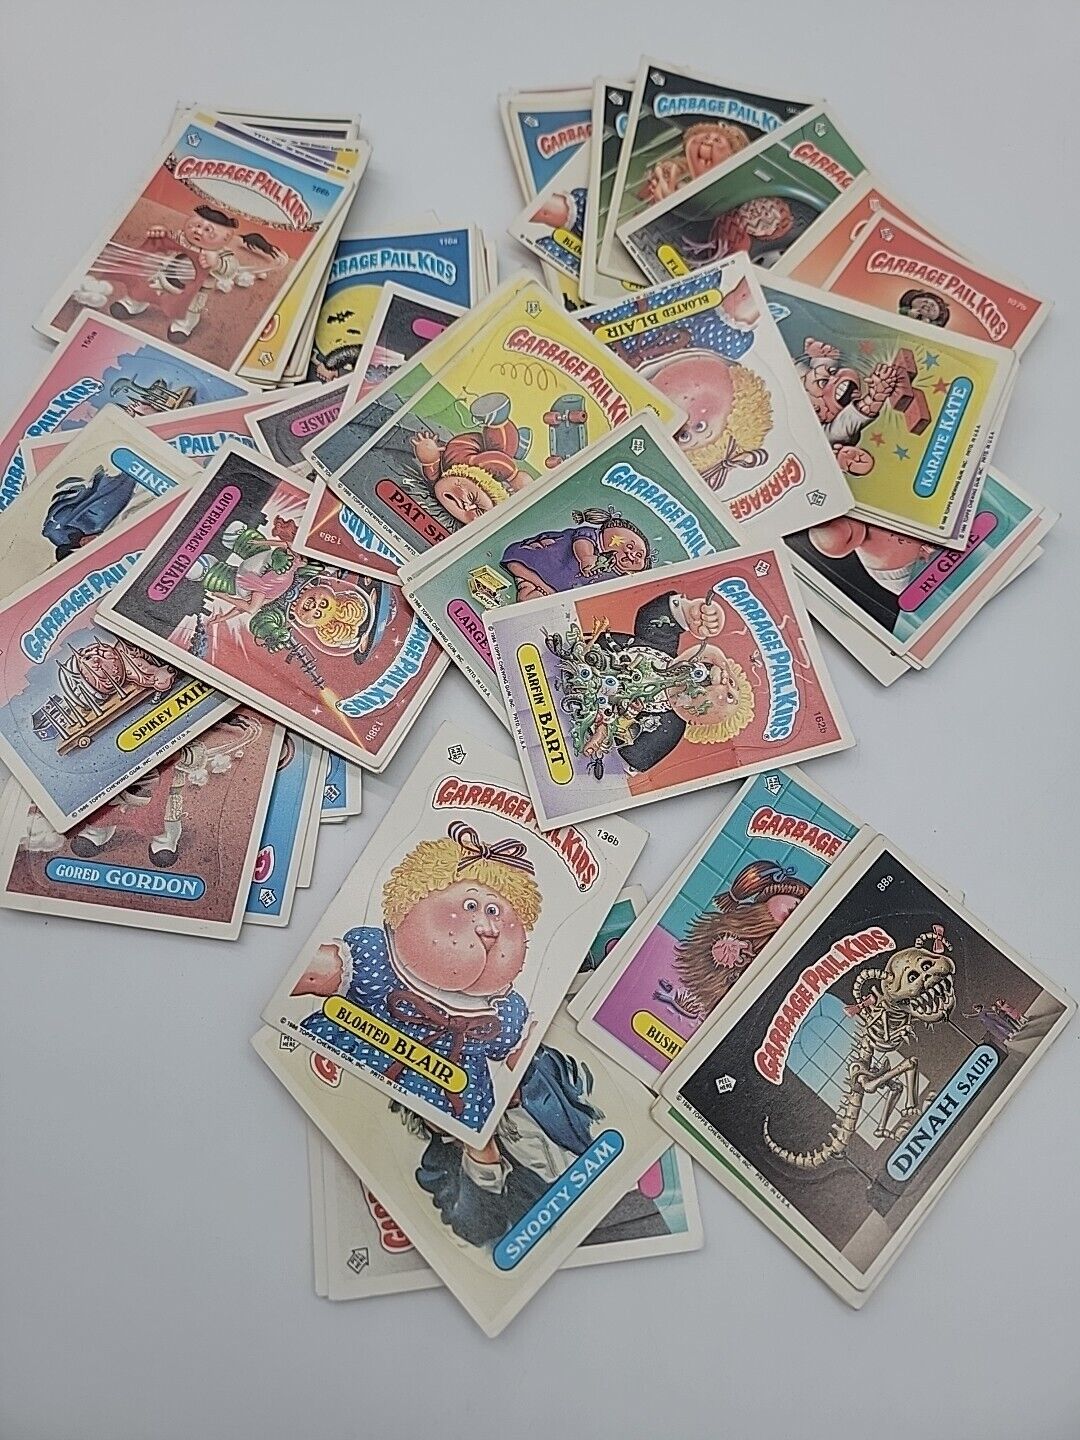 BIG Lot 80 Vintage Garbage Pail Kids Cards Original Series) 1985-1987 NICE-PICS